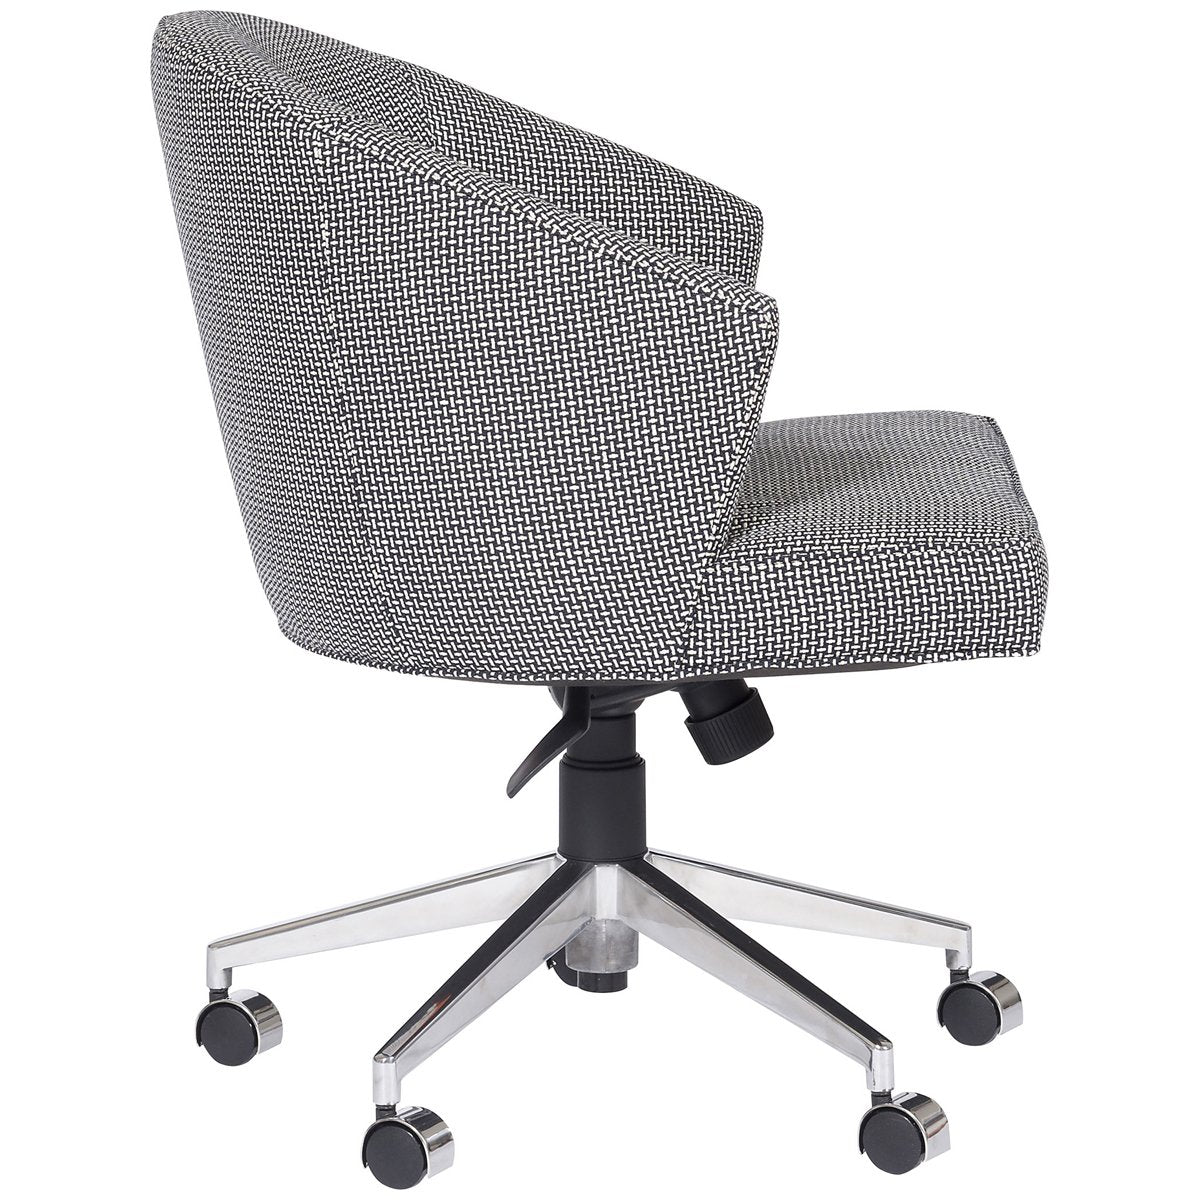 Vanguard Furniture Charley Desk Chair